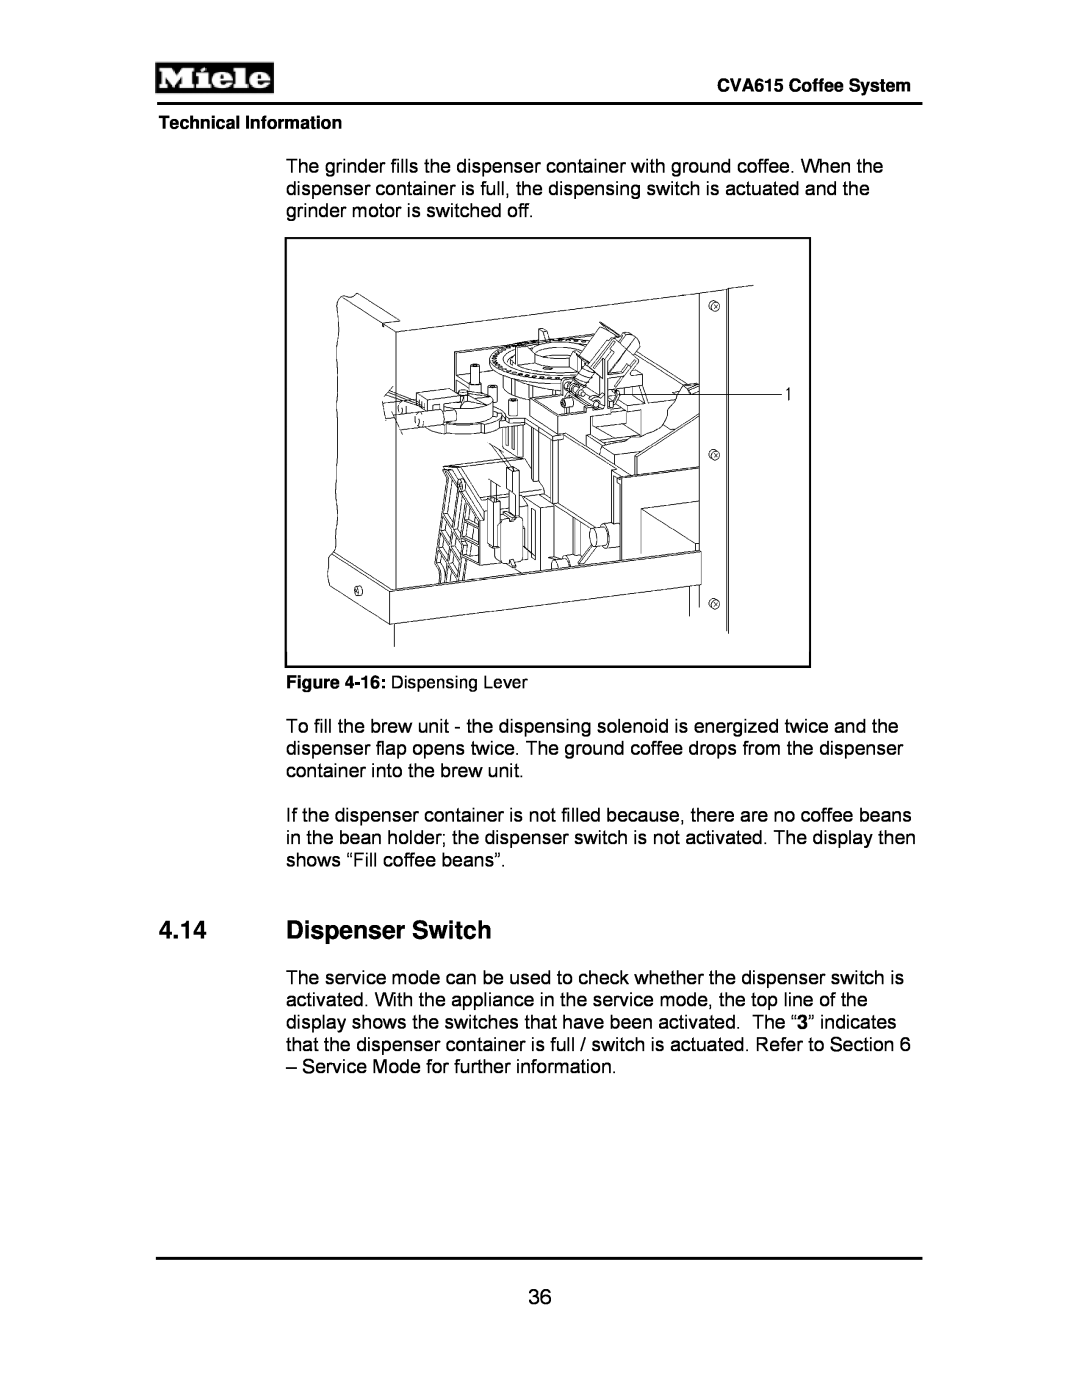 Miele CVA615 manual 4.14Dispenser Switch 